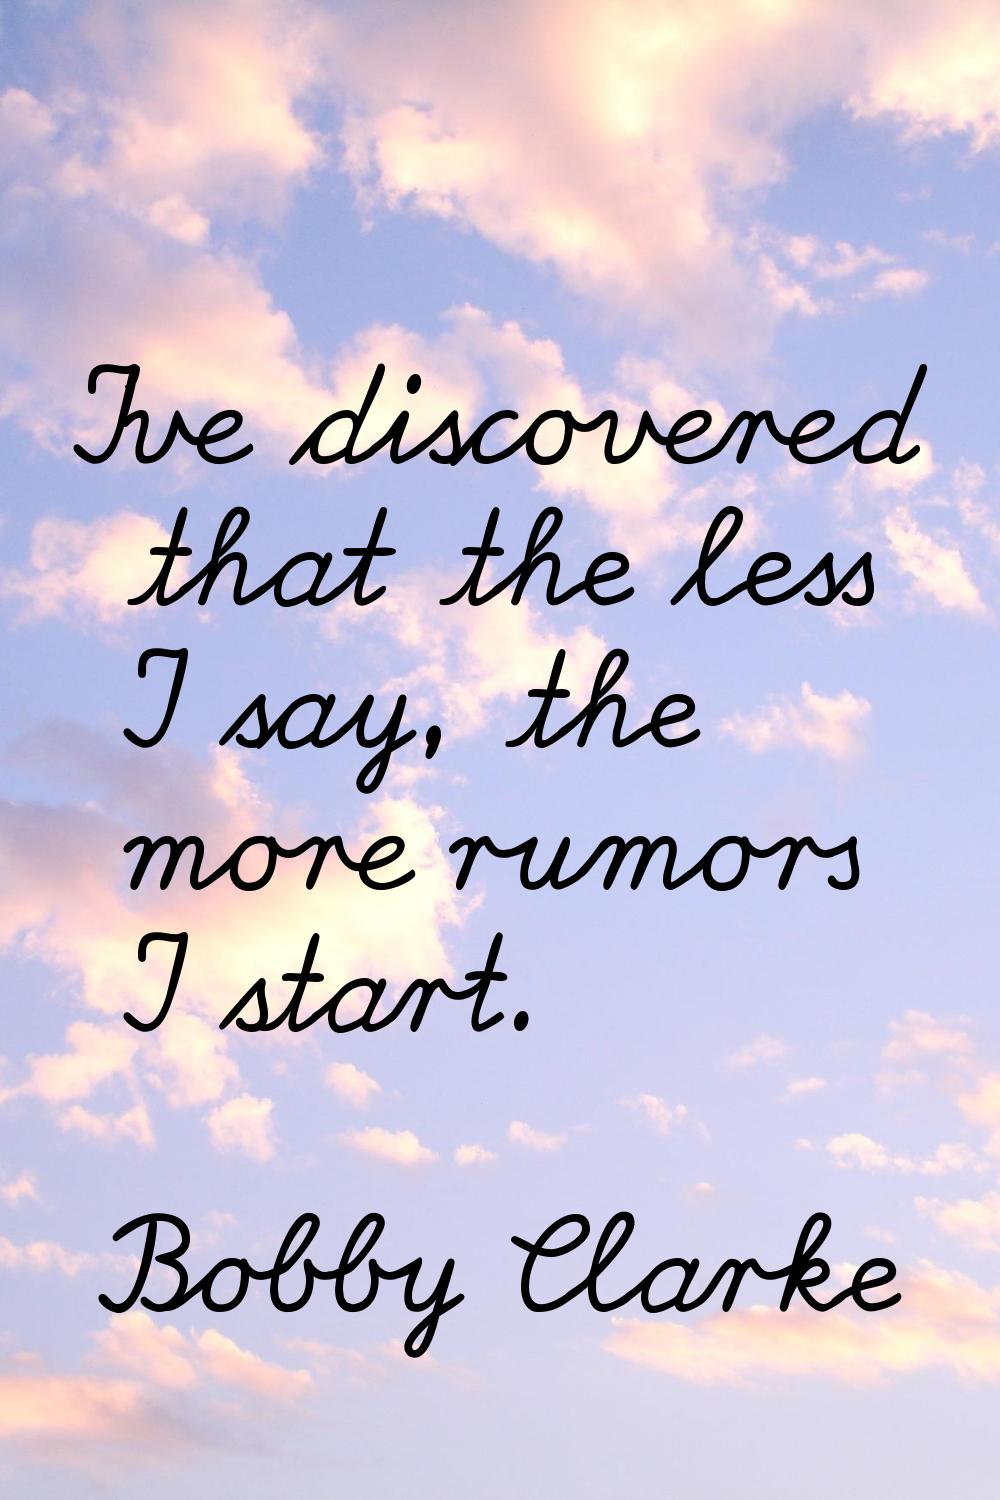 I've discovered that the less I say, the more rumors I start.